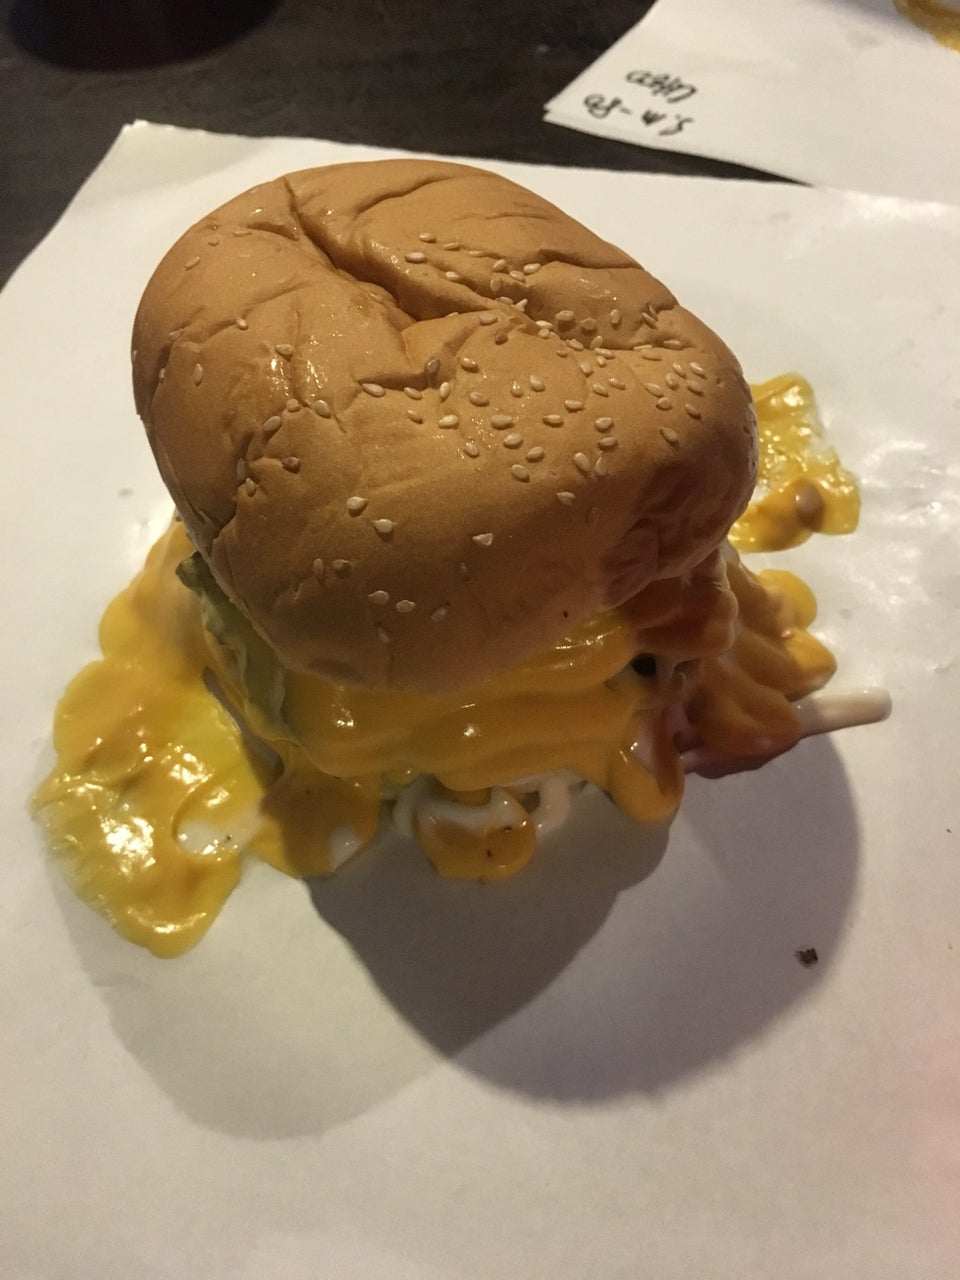 Metallicheeze rockstarz burger @ tempat makan penang